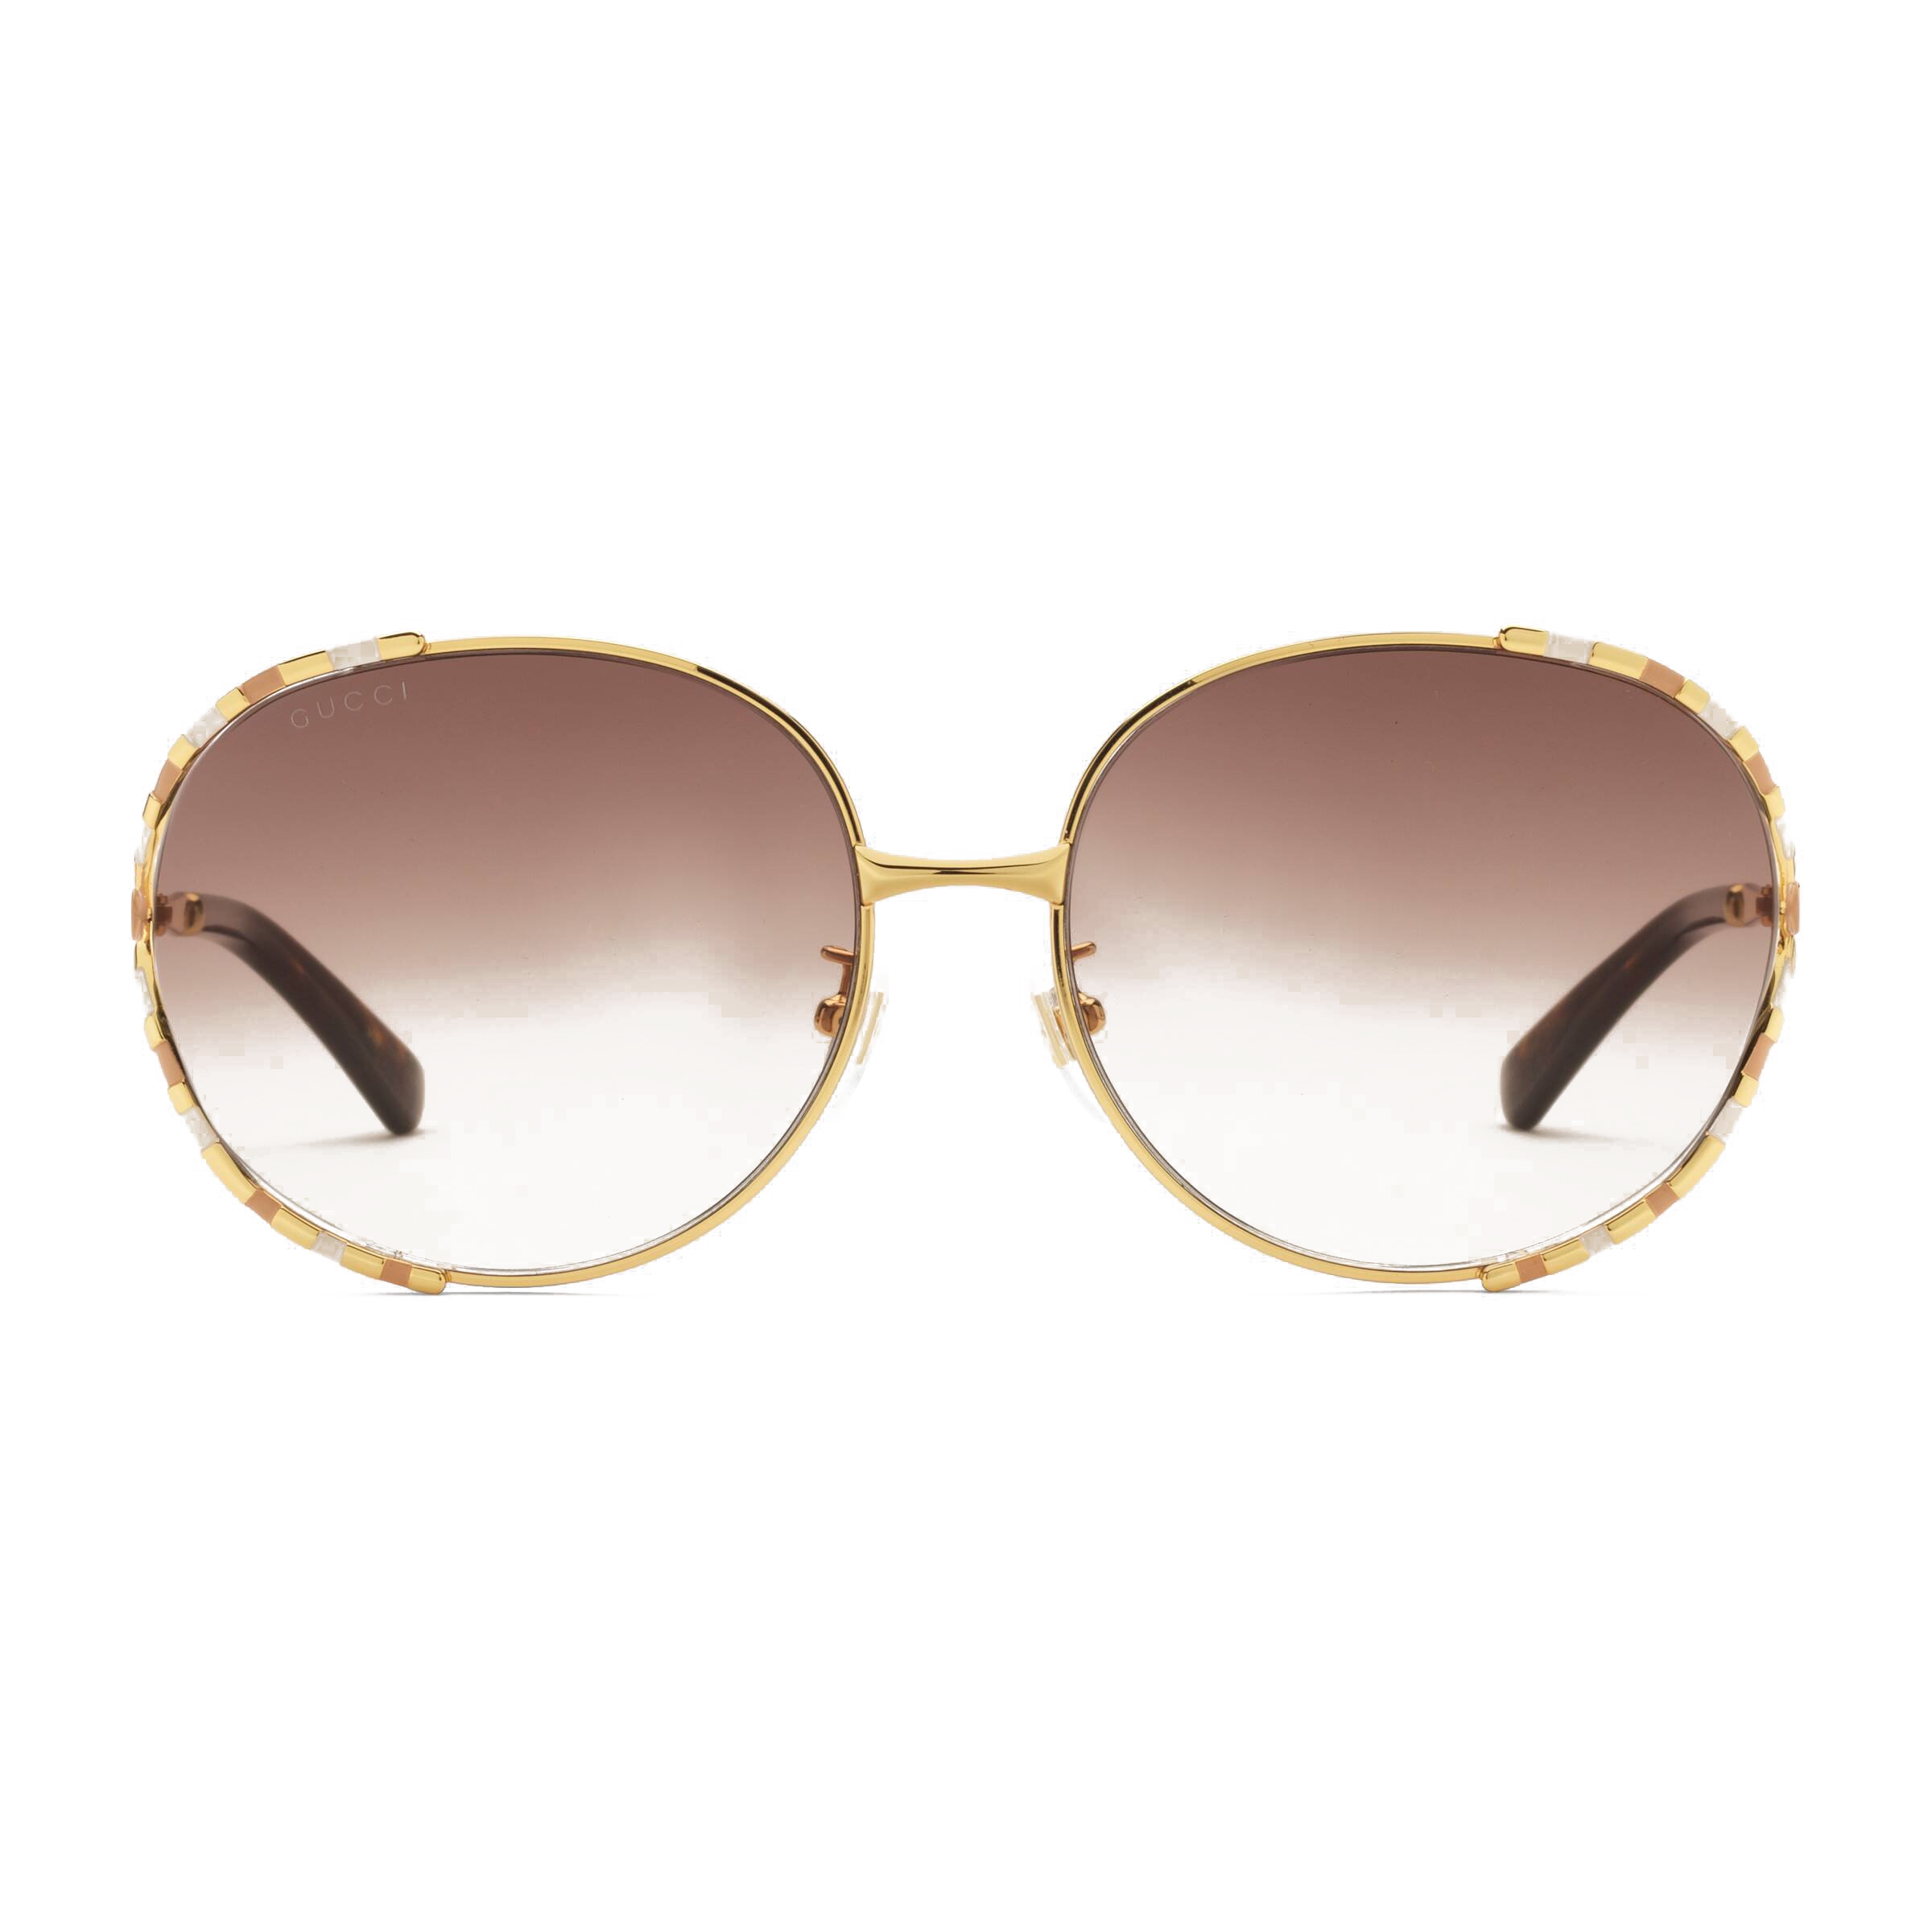 Aubergine udredning belønning Gucci - Round Metal Sunglasses - Gold Beige Ivory - Gucci Eyewear - Avvenice